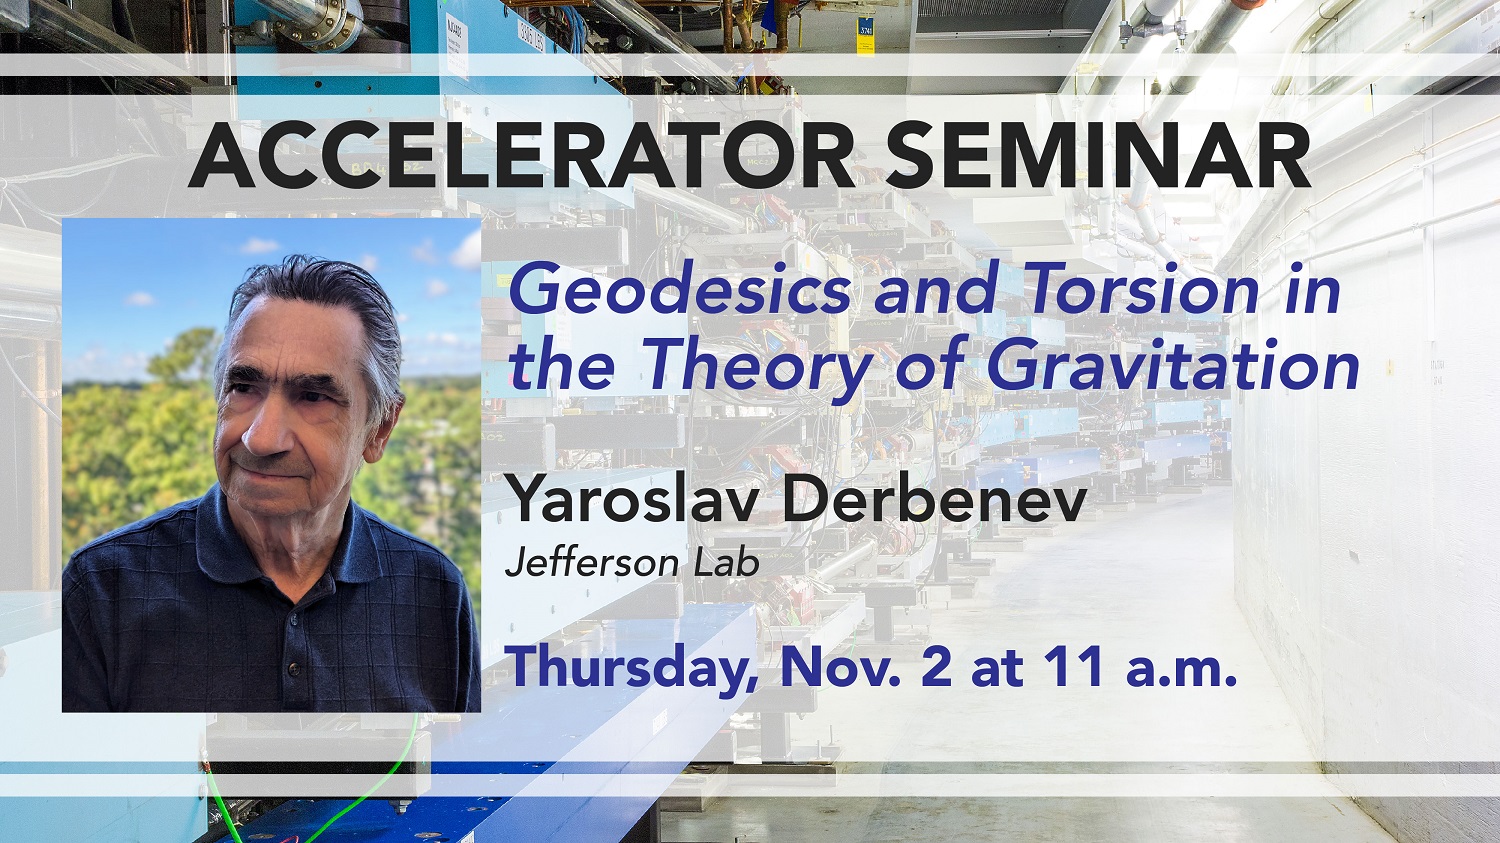 Accelerator Seminar: Yaroslav Derbenev